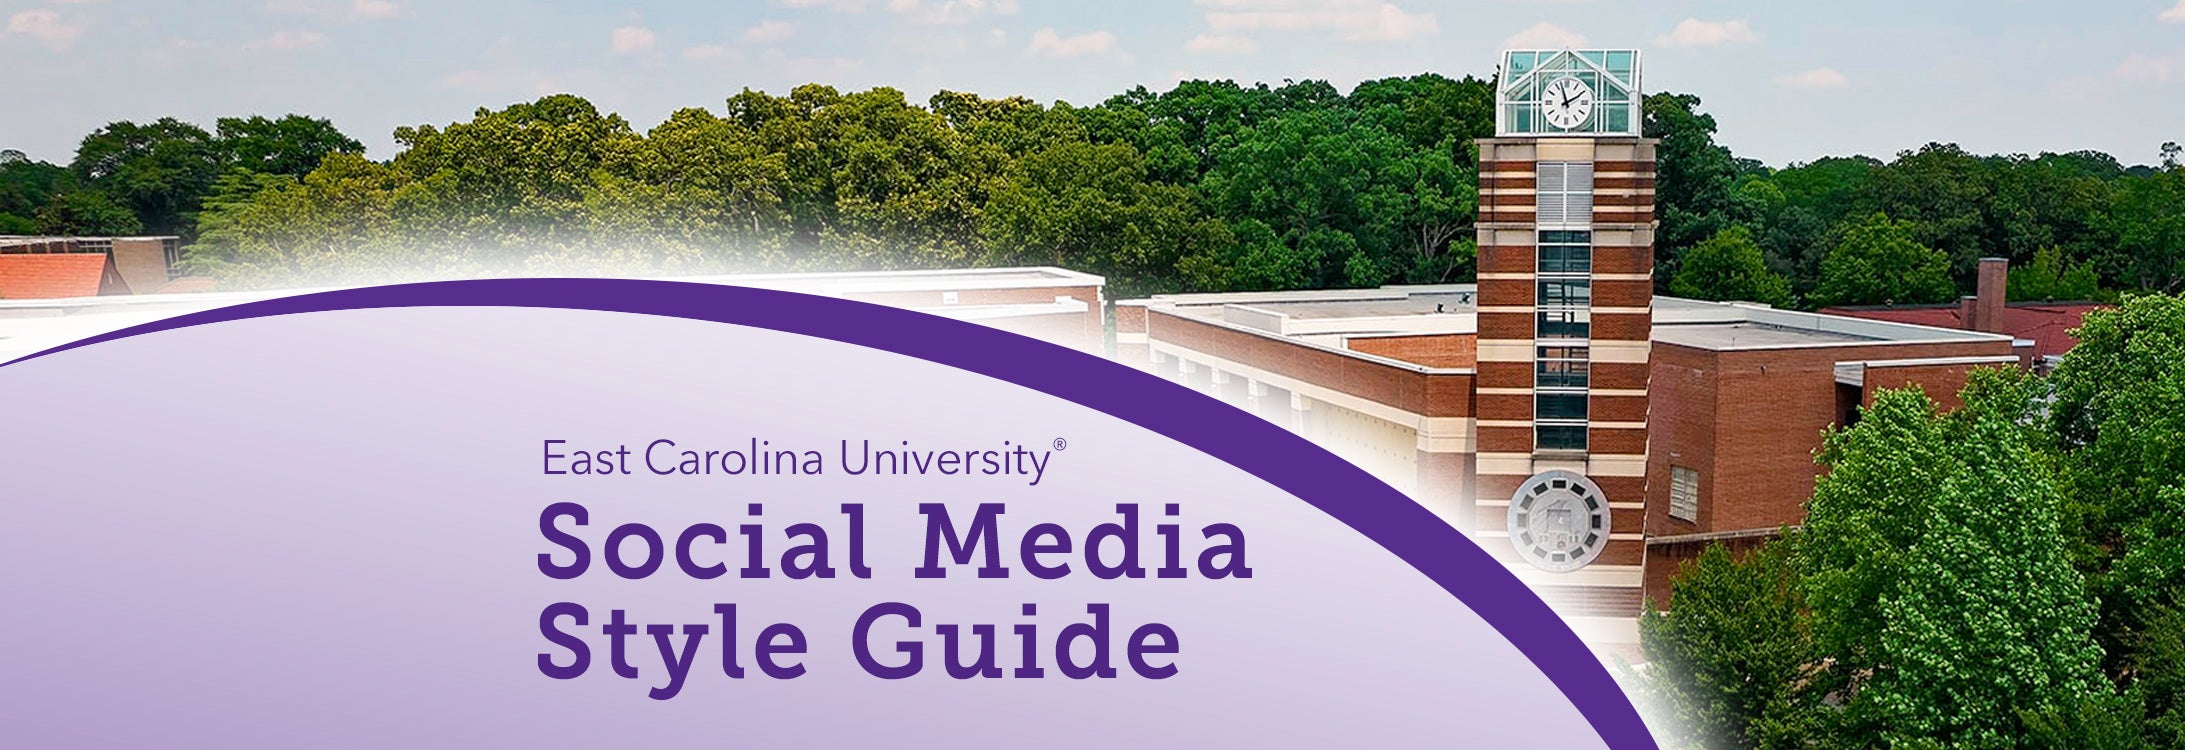 East Carolina University Social Media Style Guide